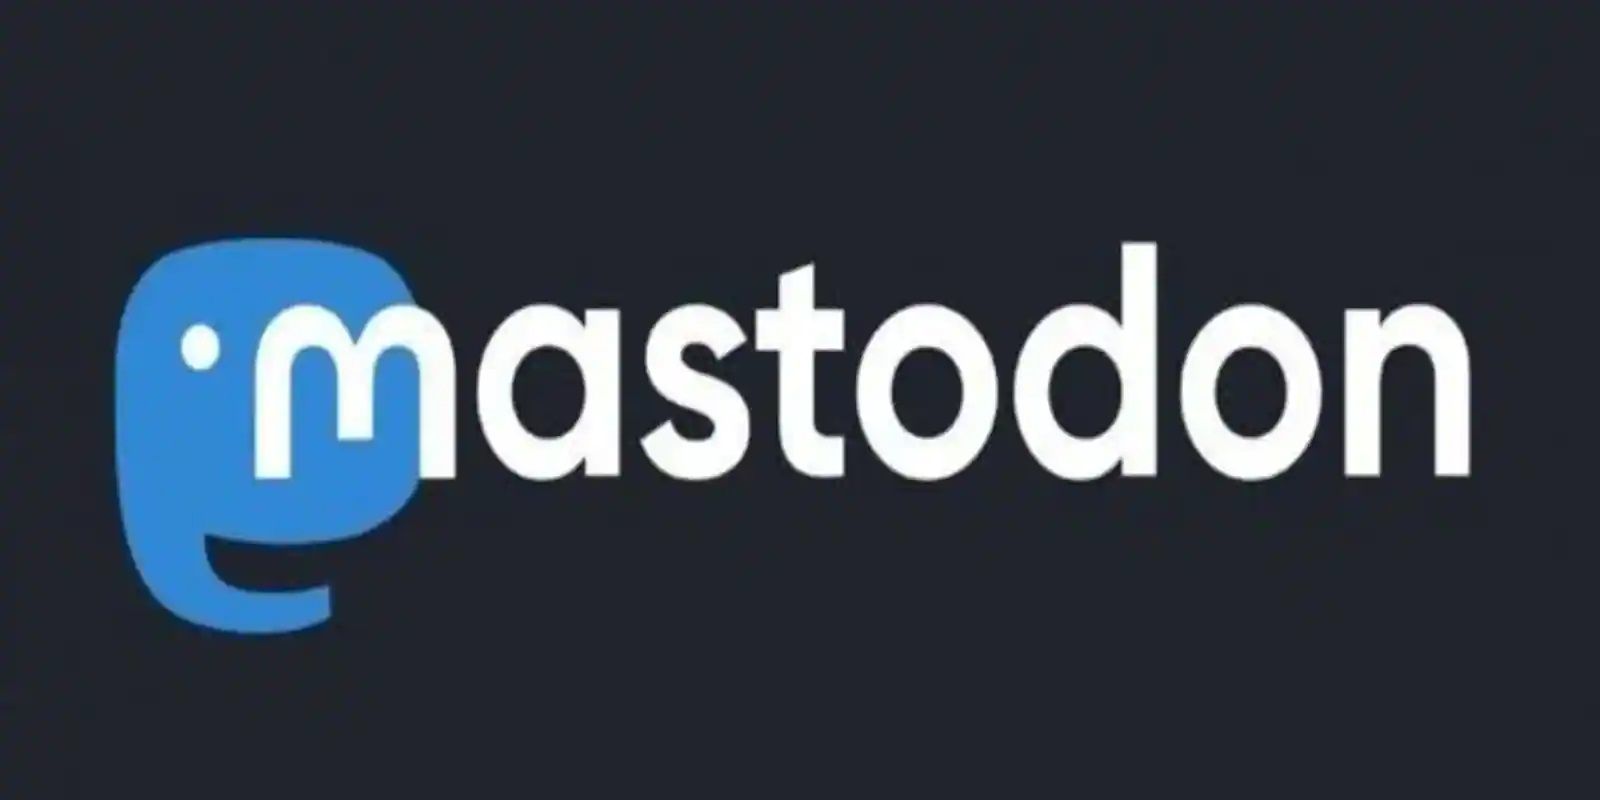 The Mastodon social media logo